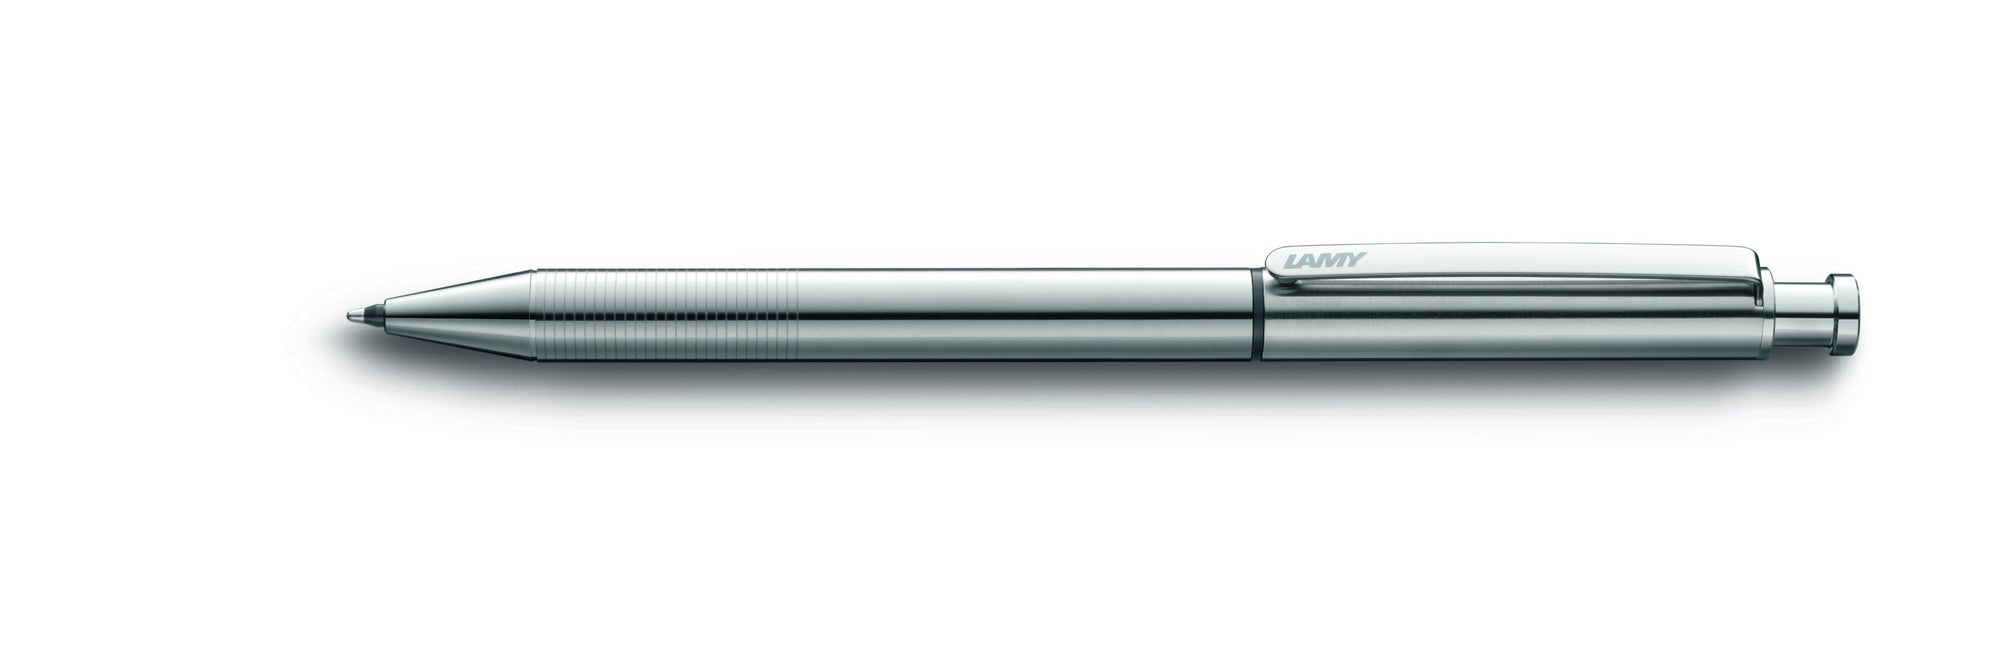 ST Twin Pen/Pencil 0.5mm - Blesket Canada